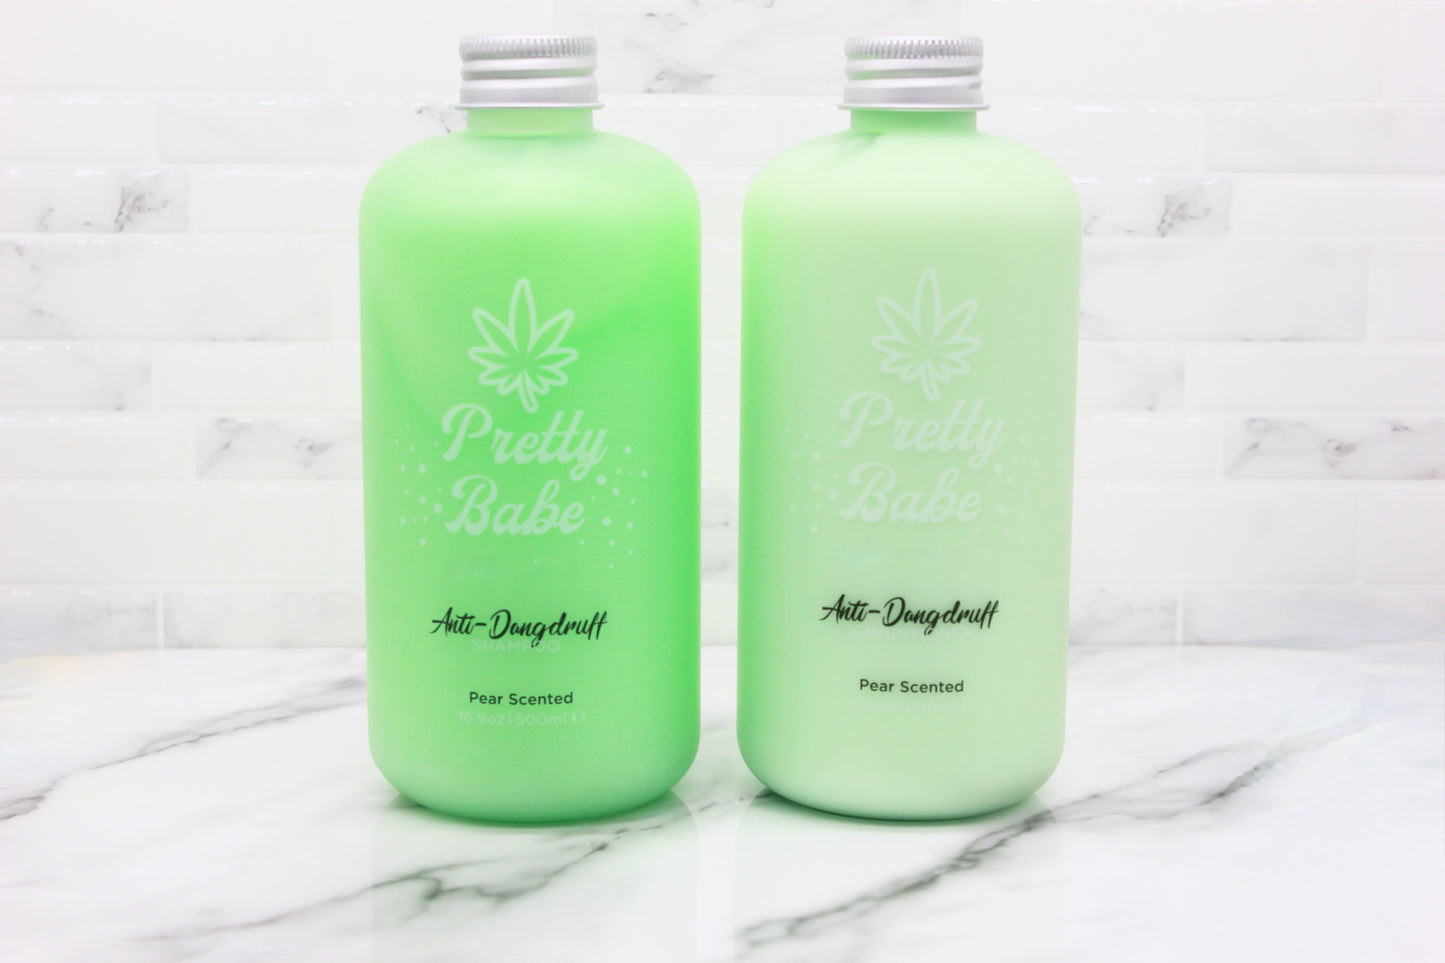 Pretty Babe Botanical Shampoo & Conditioner